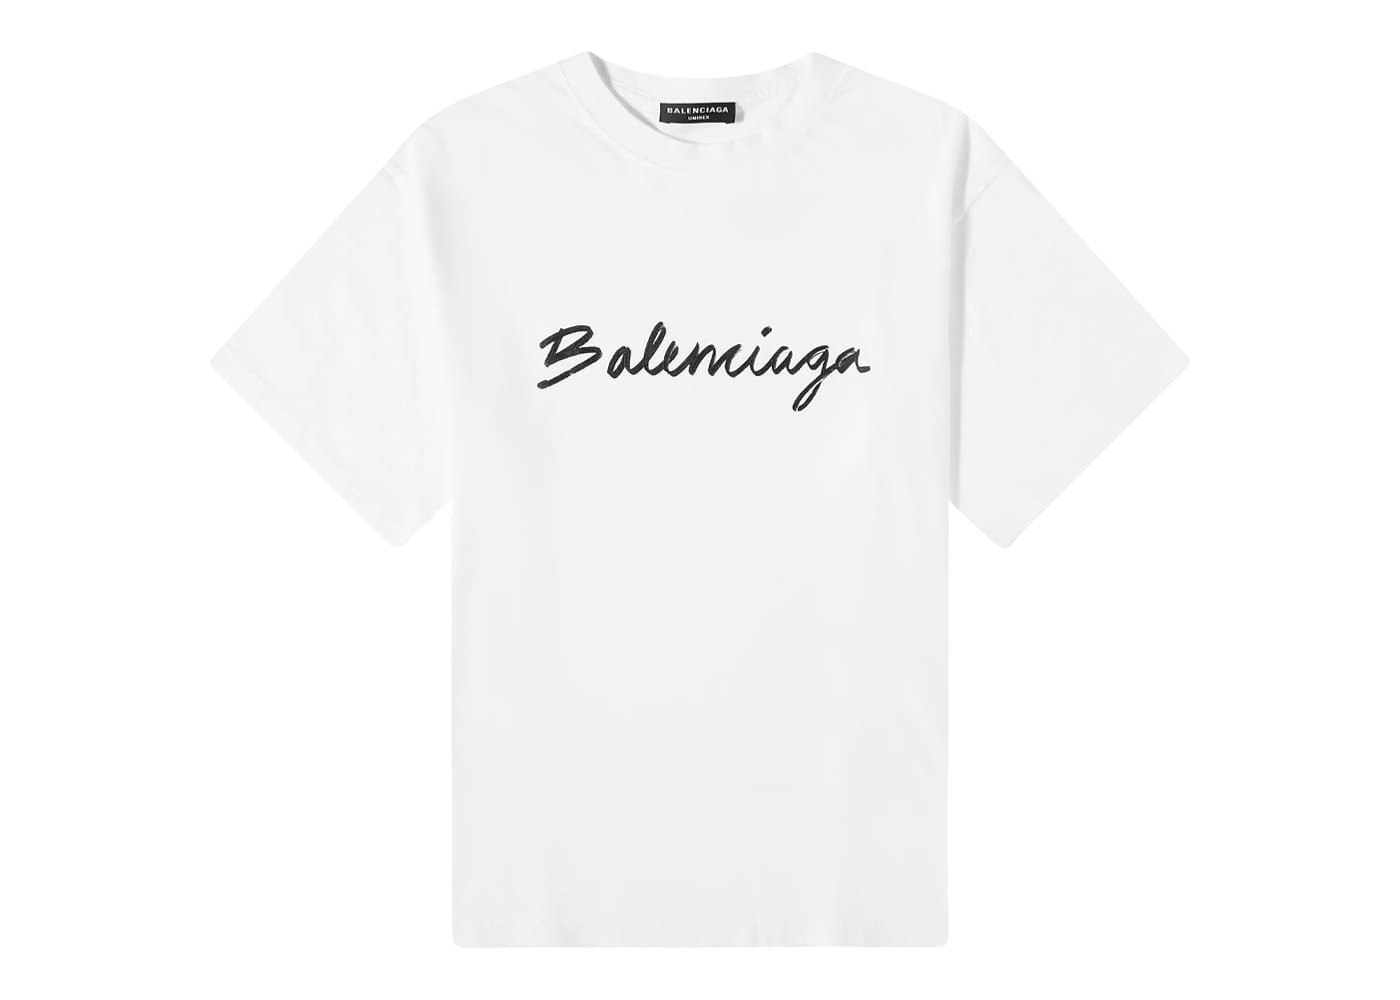 balenciaga shirt on shirt price super discount 51 off   wwwhumumssedubo